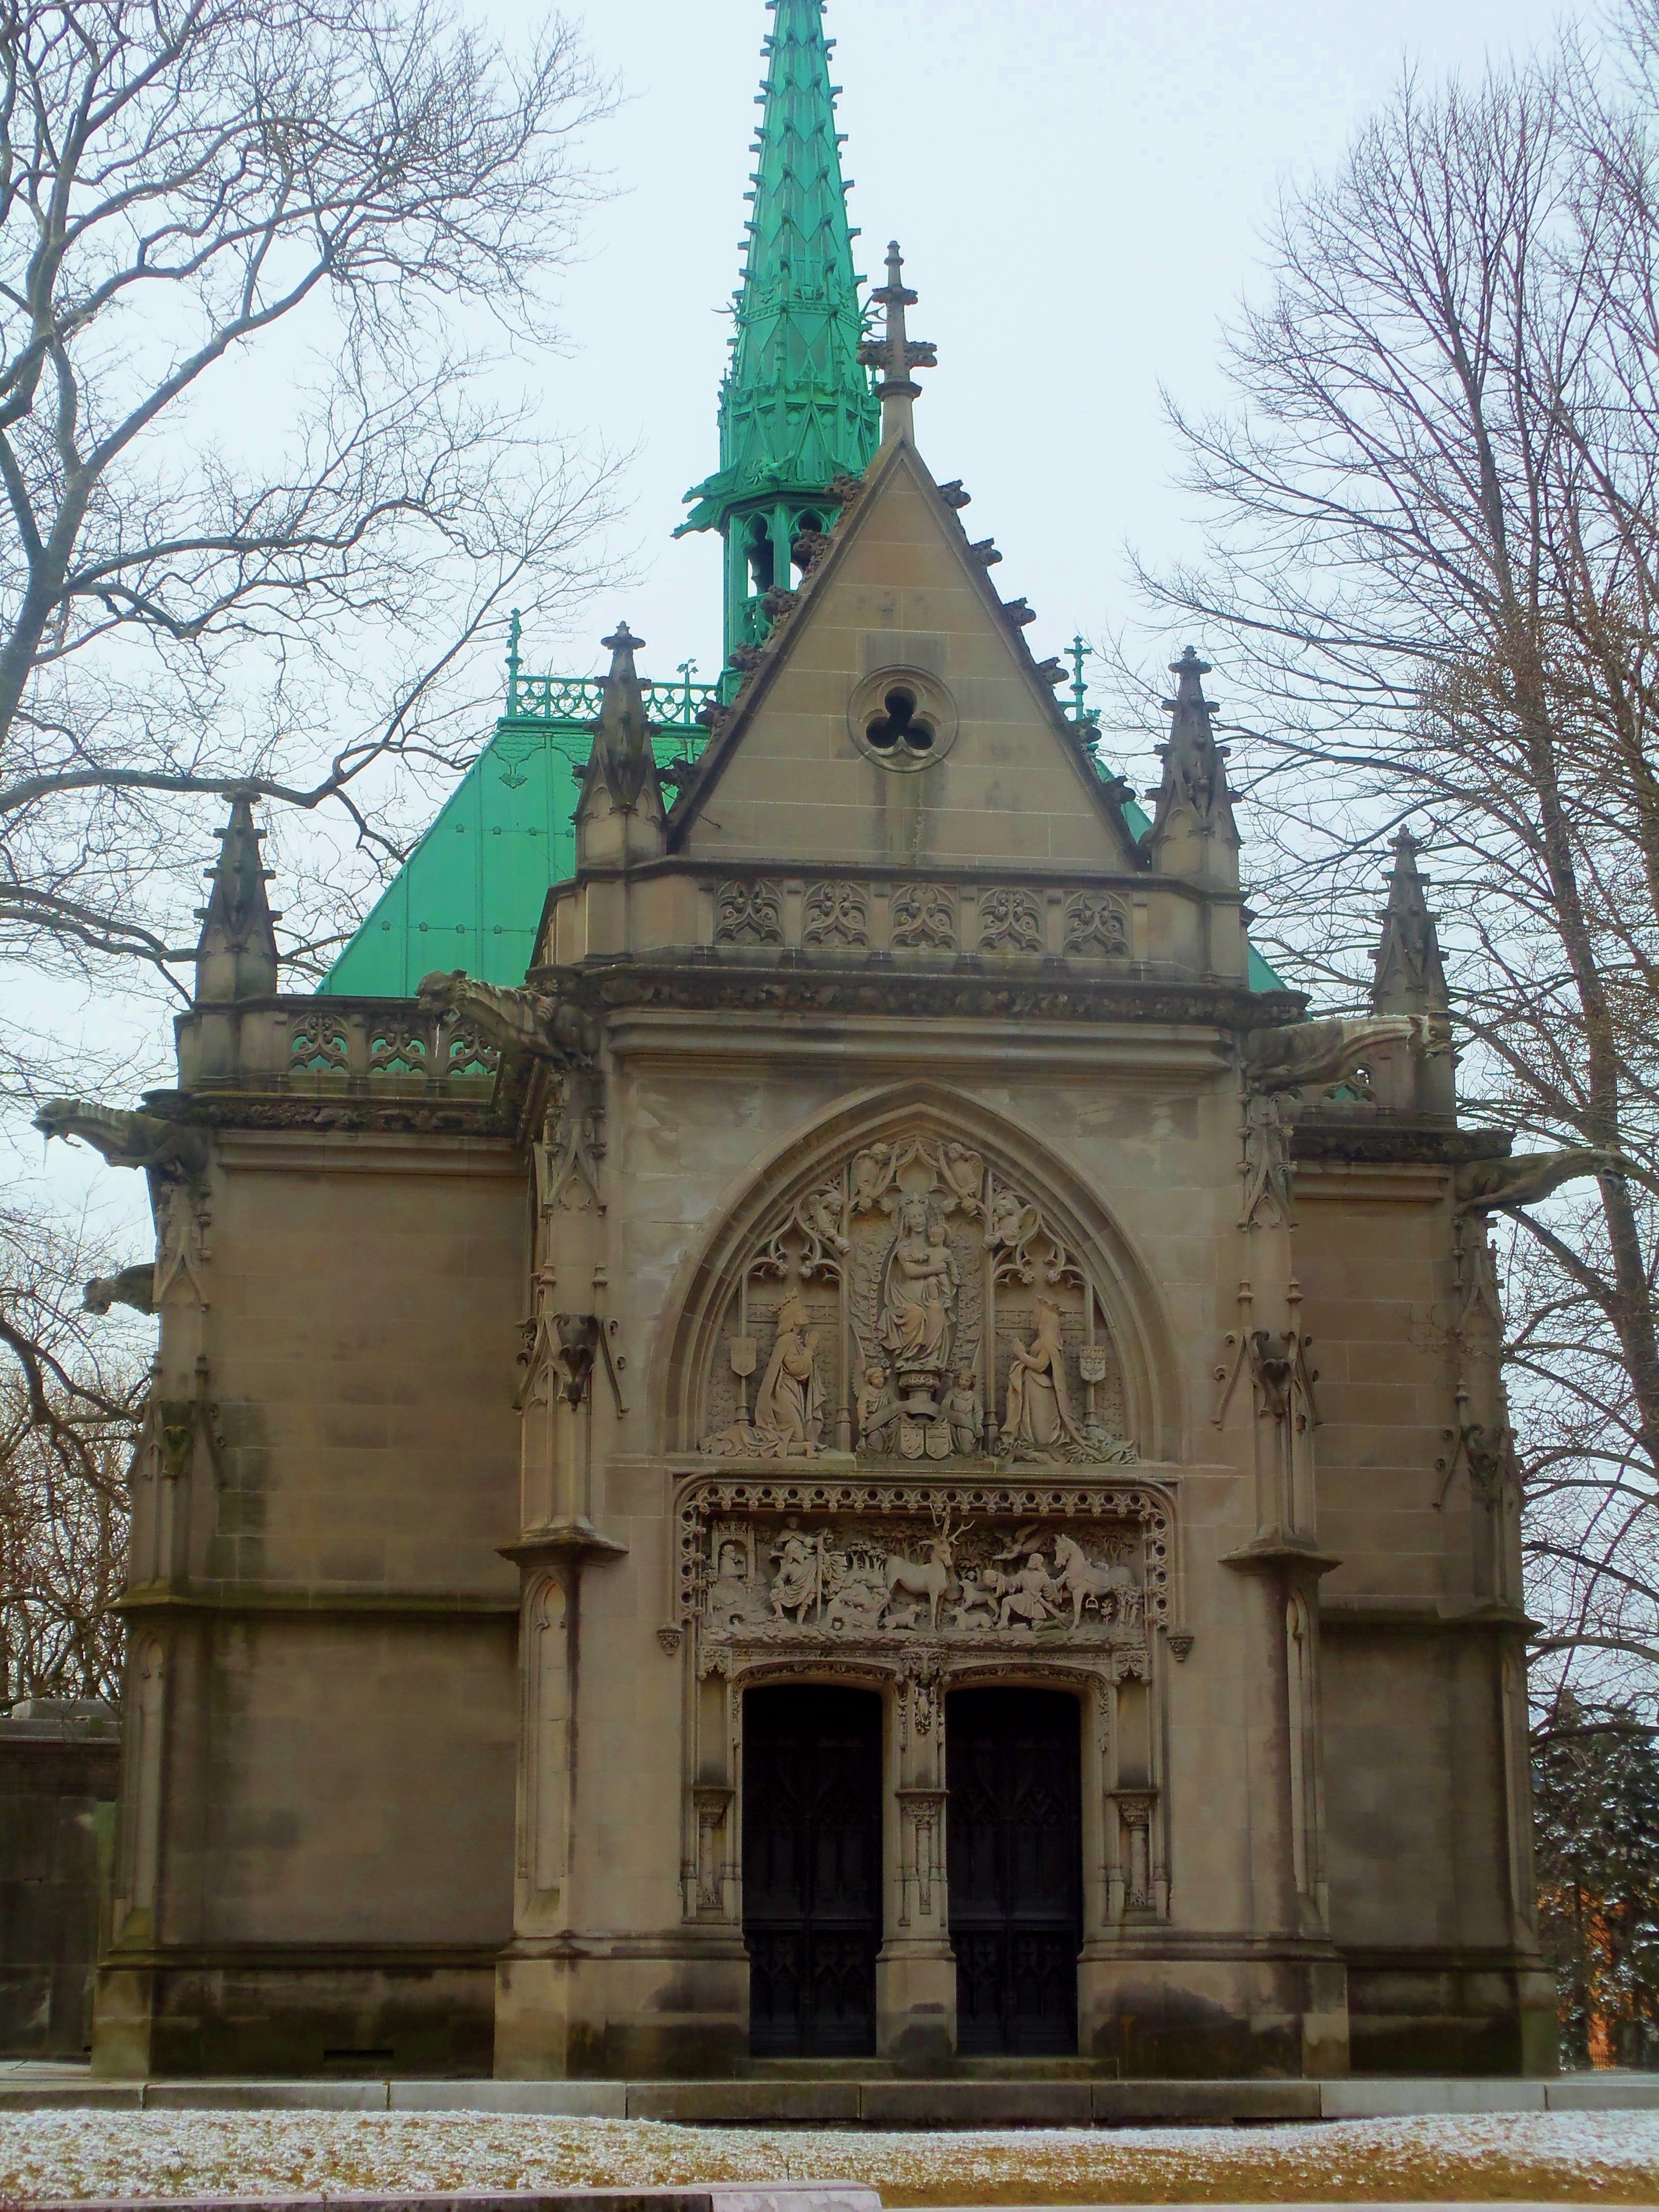 Belmont Mausoleum